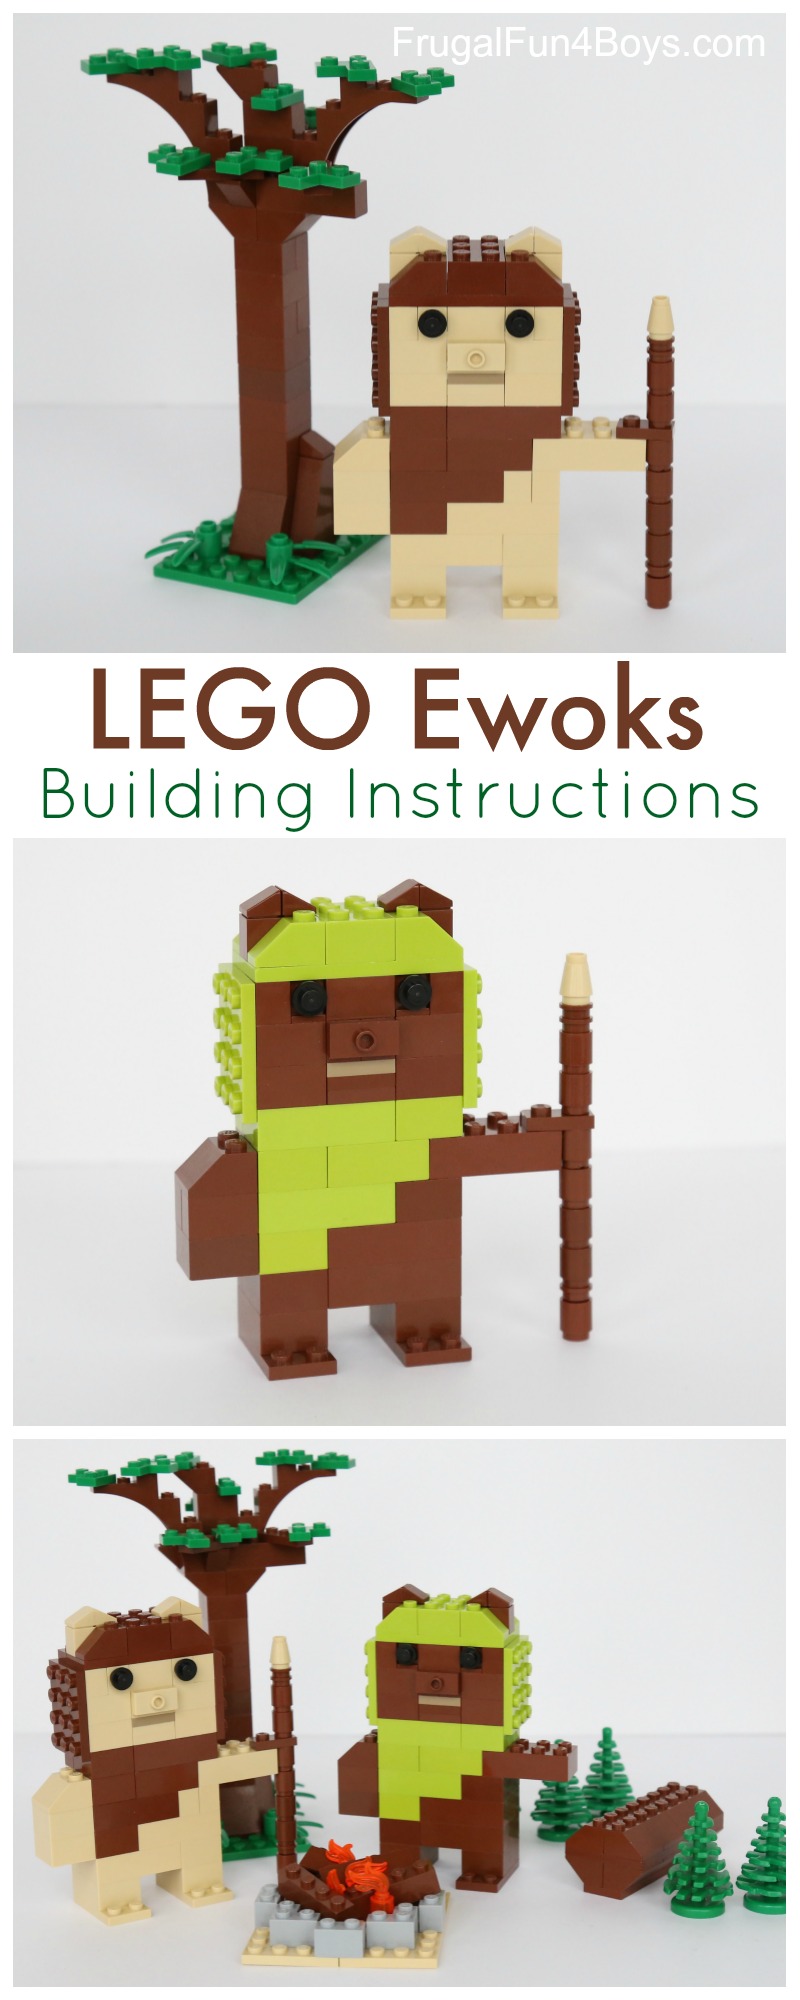 LEGO Ewoks with Building Instructions